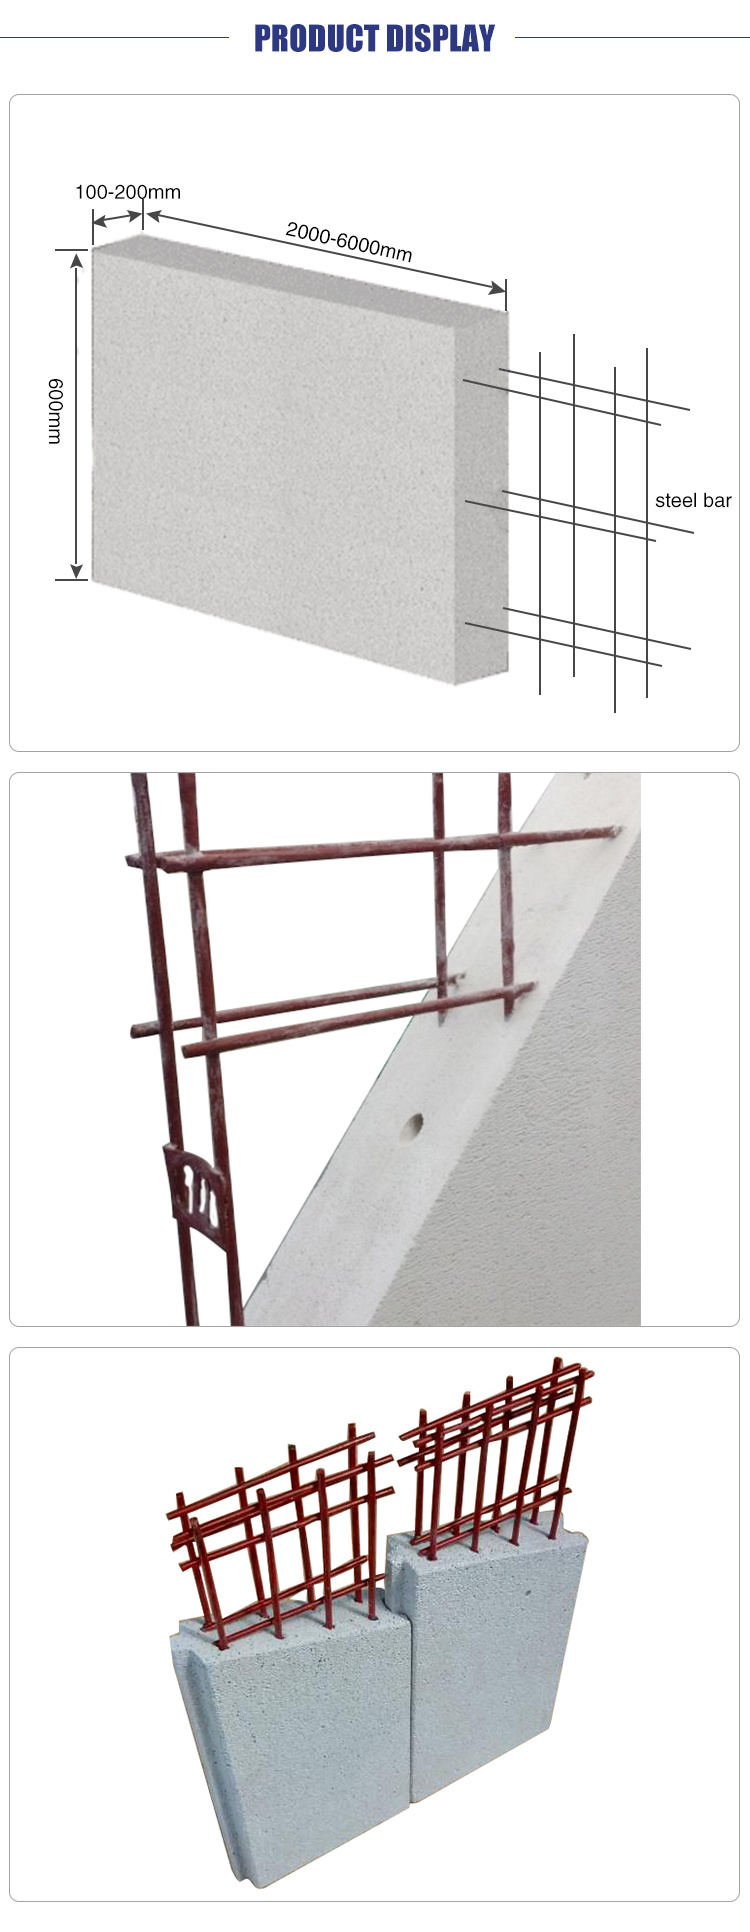 Lightweight Concrete Blocks Lightweight Precast Concrete Alc Panel 